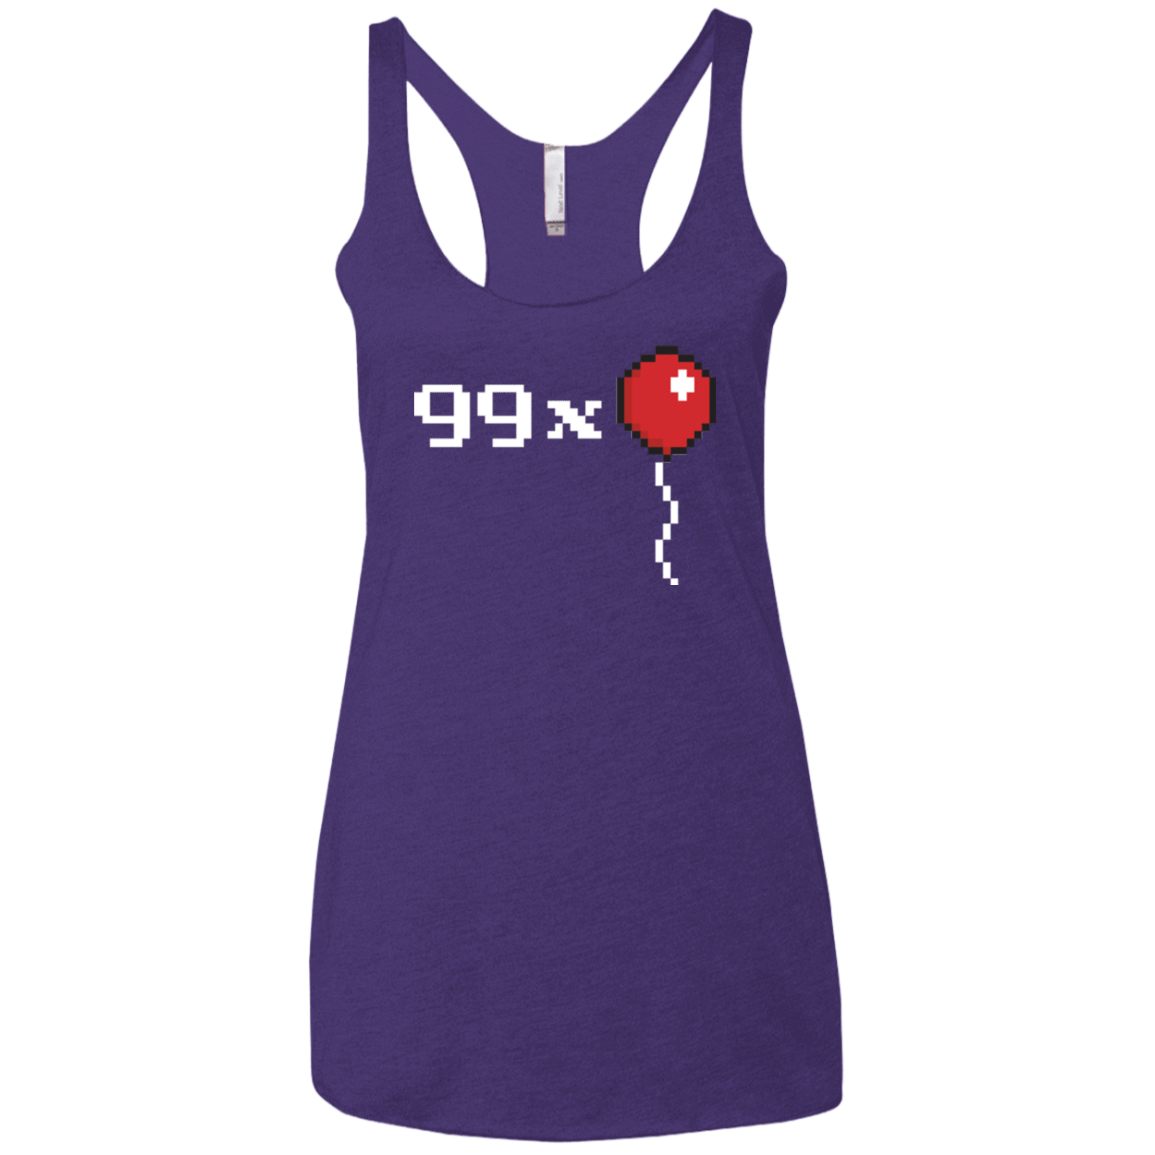 T-Shirts Purple / X-Small 99x Balloon Women's Triblend Racerback Tank